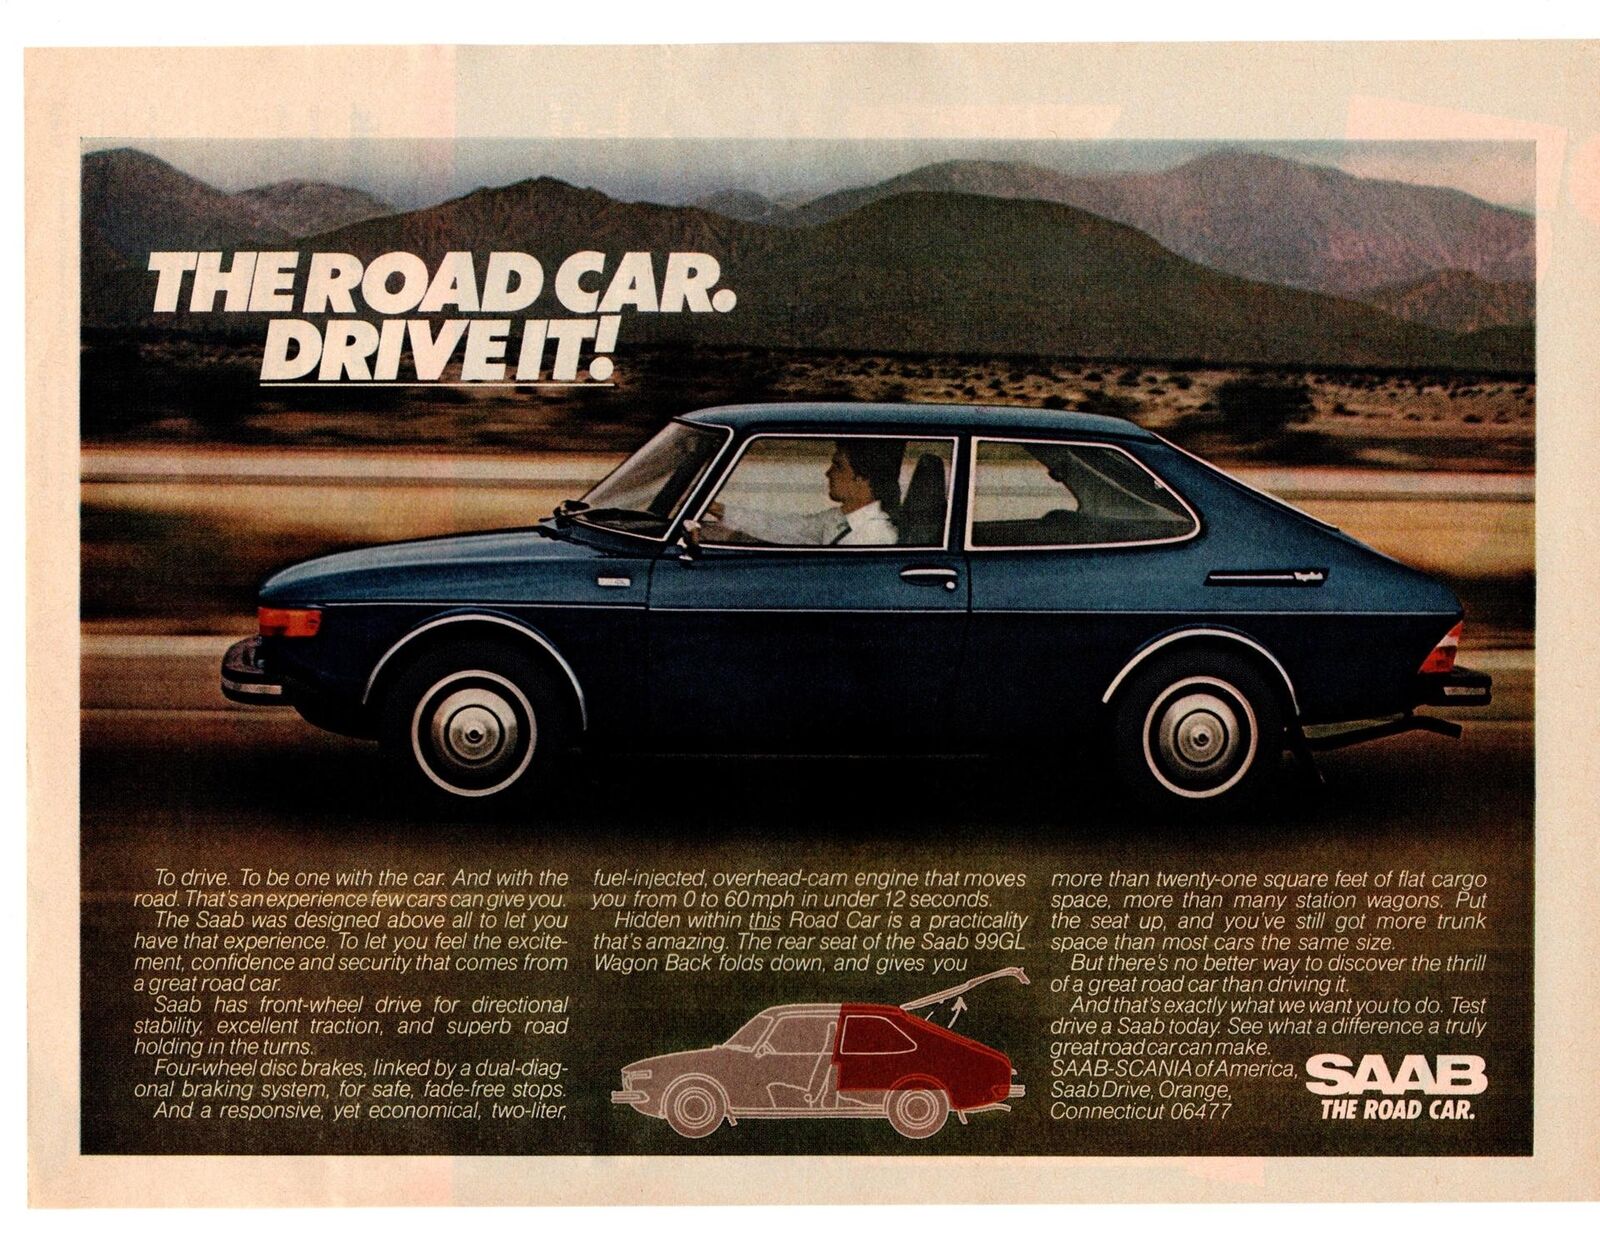 1976 Saab Scania Of America 99GL Wagonback Road Car 0 To 60 12 Seconds Print Ad